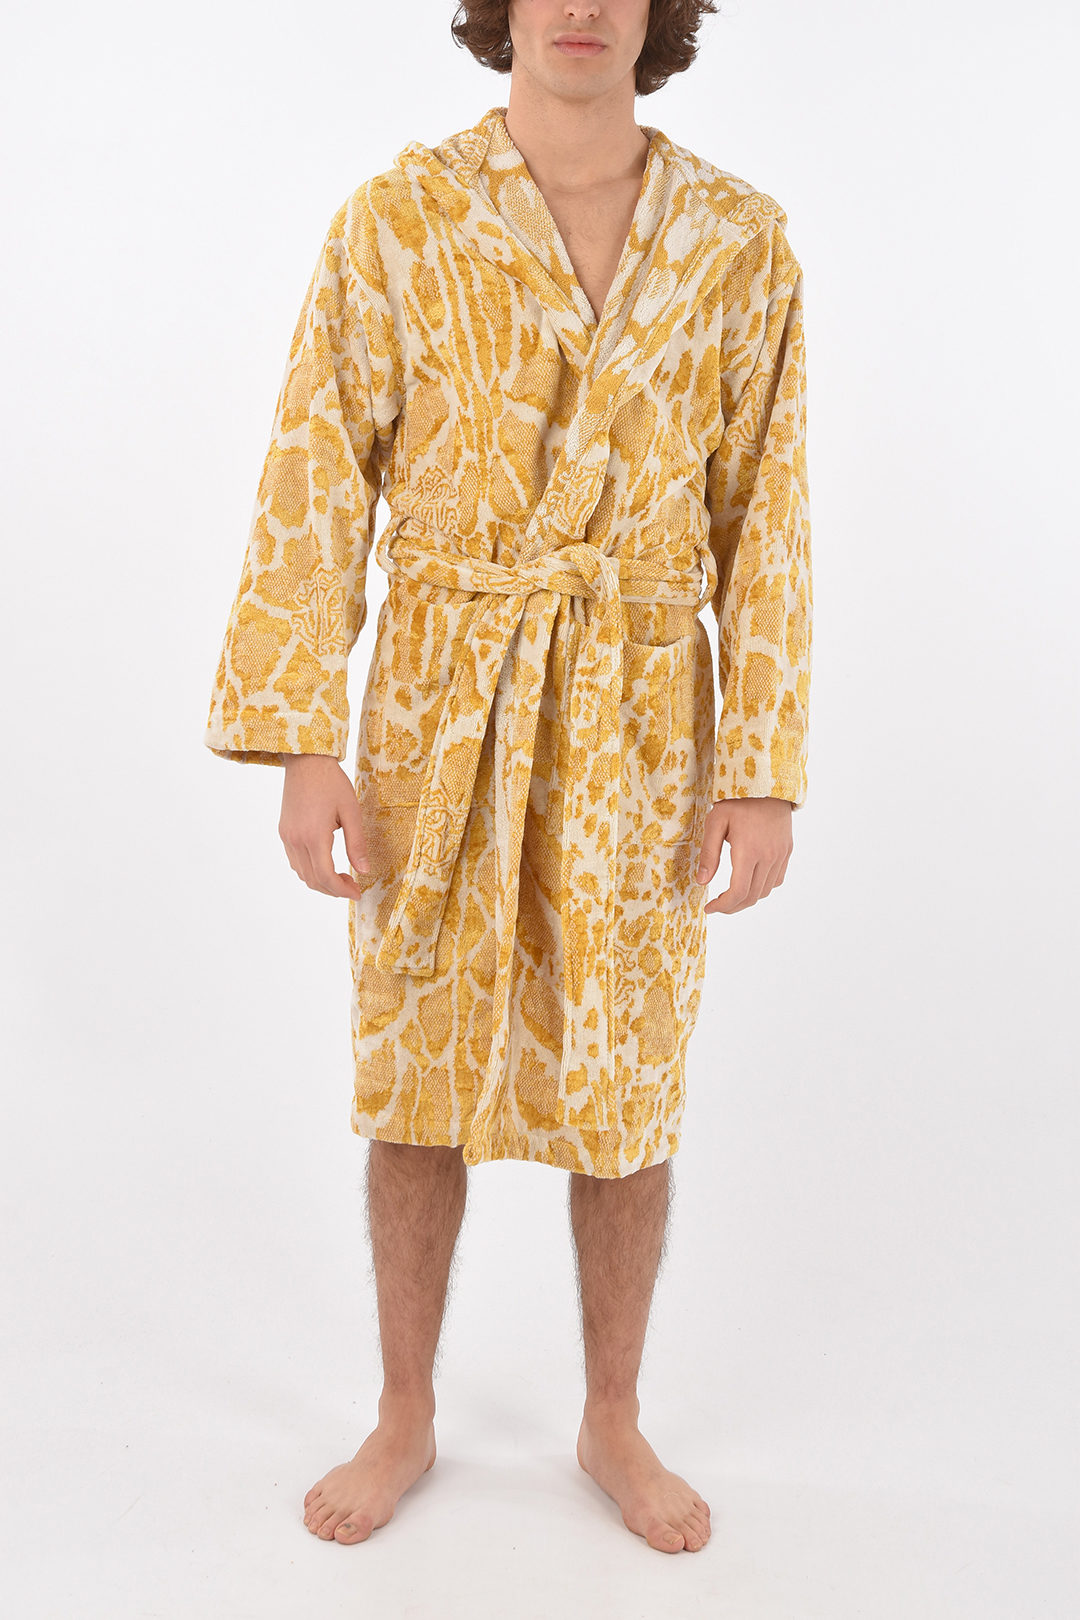 Details about   Roberto Cavalli unisex sponge bathrobe with hood LINX brown 